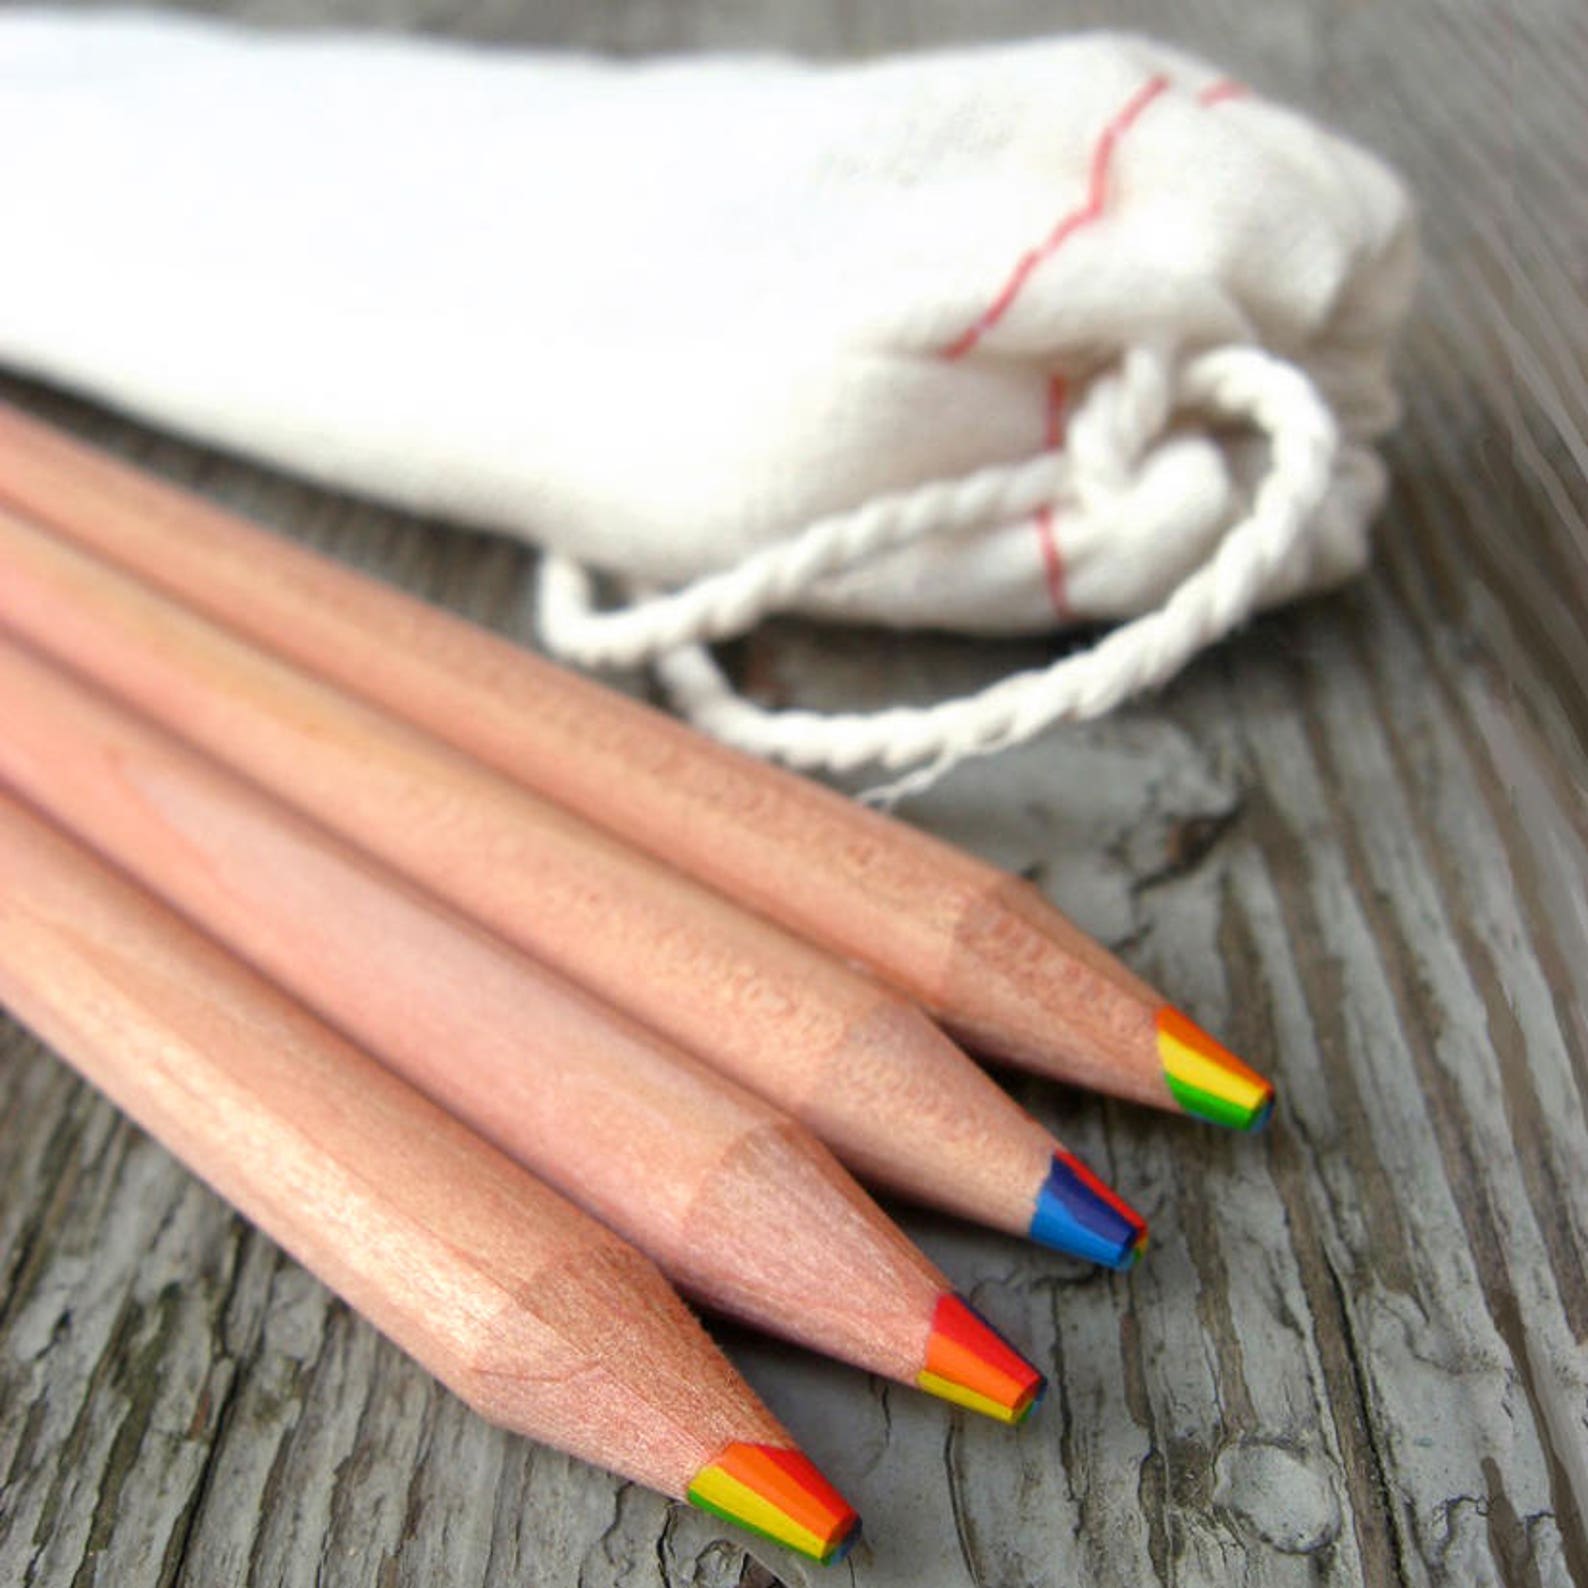 These your pencils. Радужный карандаш. Радужные карандаши. Красивые карандаши. Радуга карандашом.